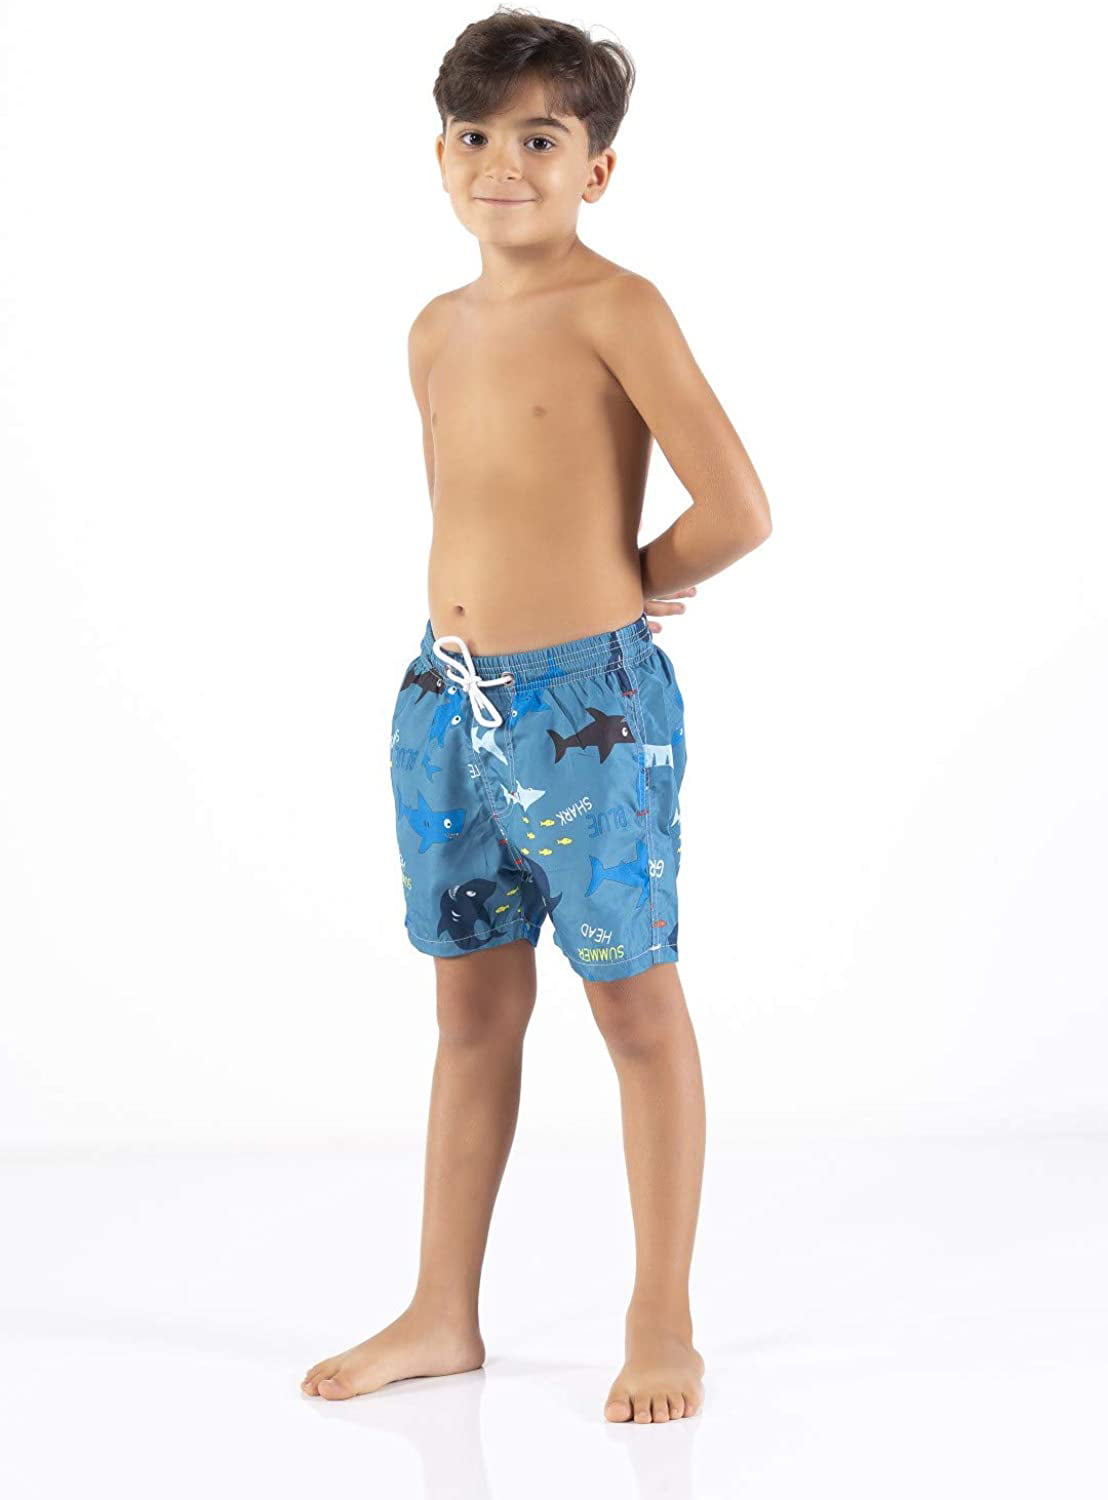 Super Ma-Rio Boys Teens Cool Swimtrunks Quick Dry 3D Printed Casual Beach Boardshorts 7-20 Years 